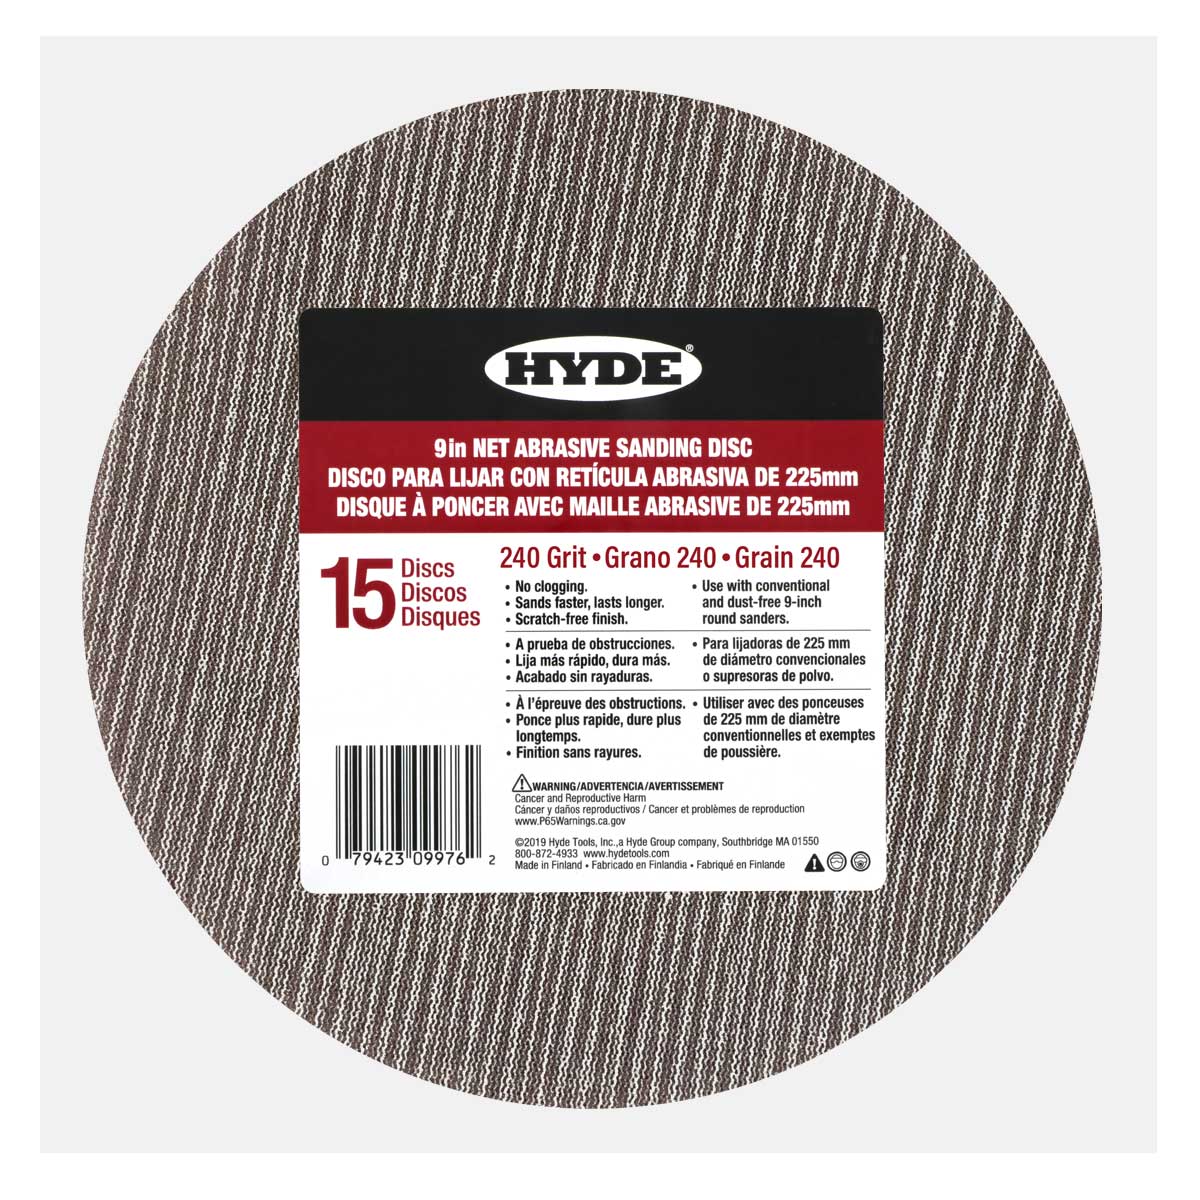 Hyde Net Abrasive Sanding Discs 240